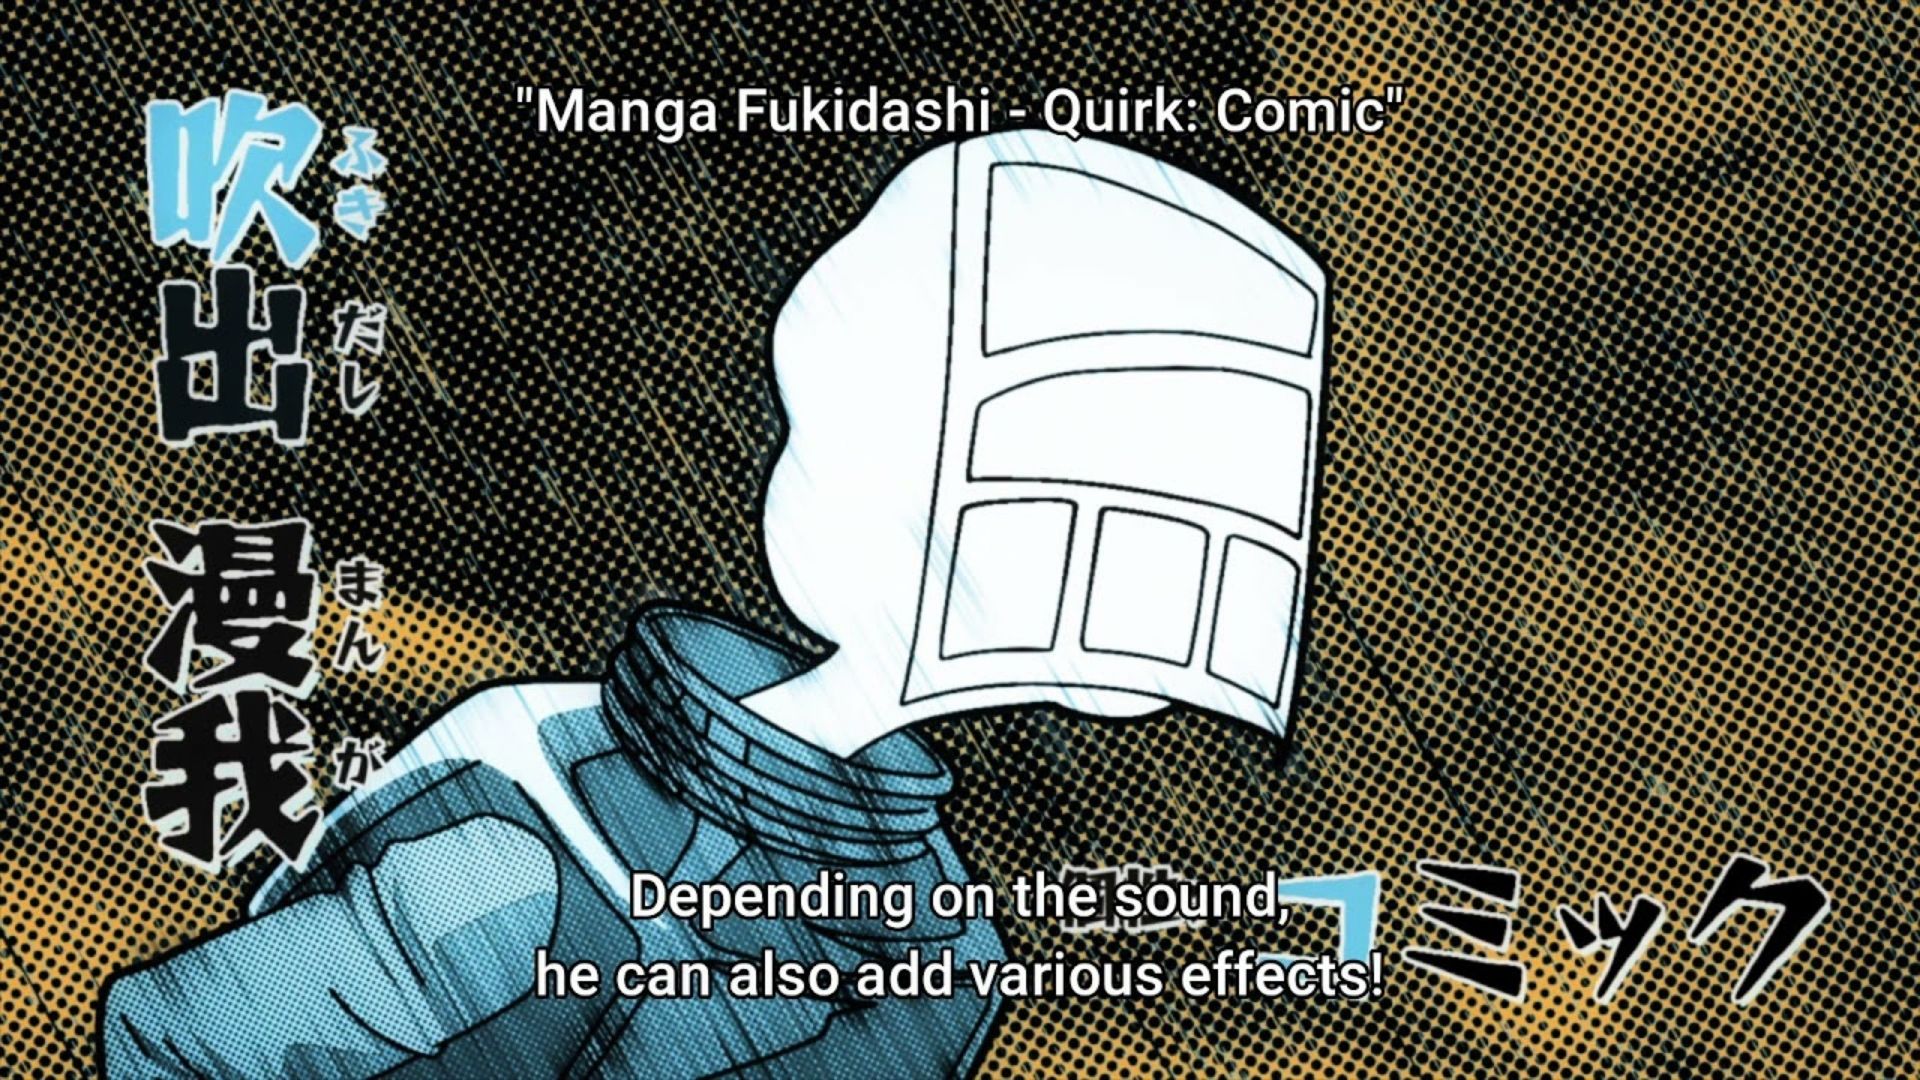 Fukidashi Manga (las peculiaridades más extrañas de mi academia de héroe)